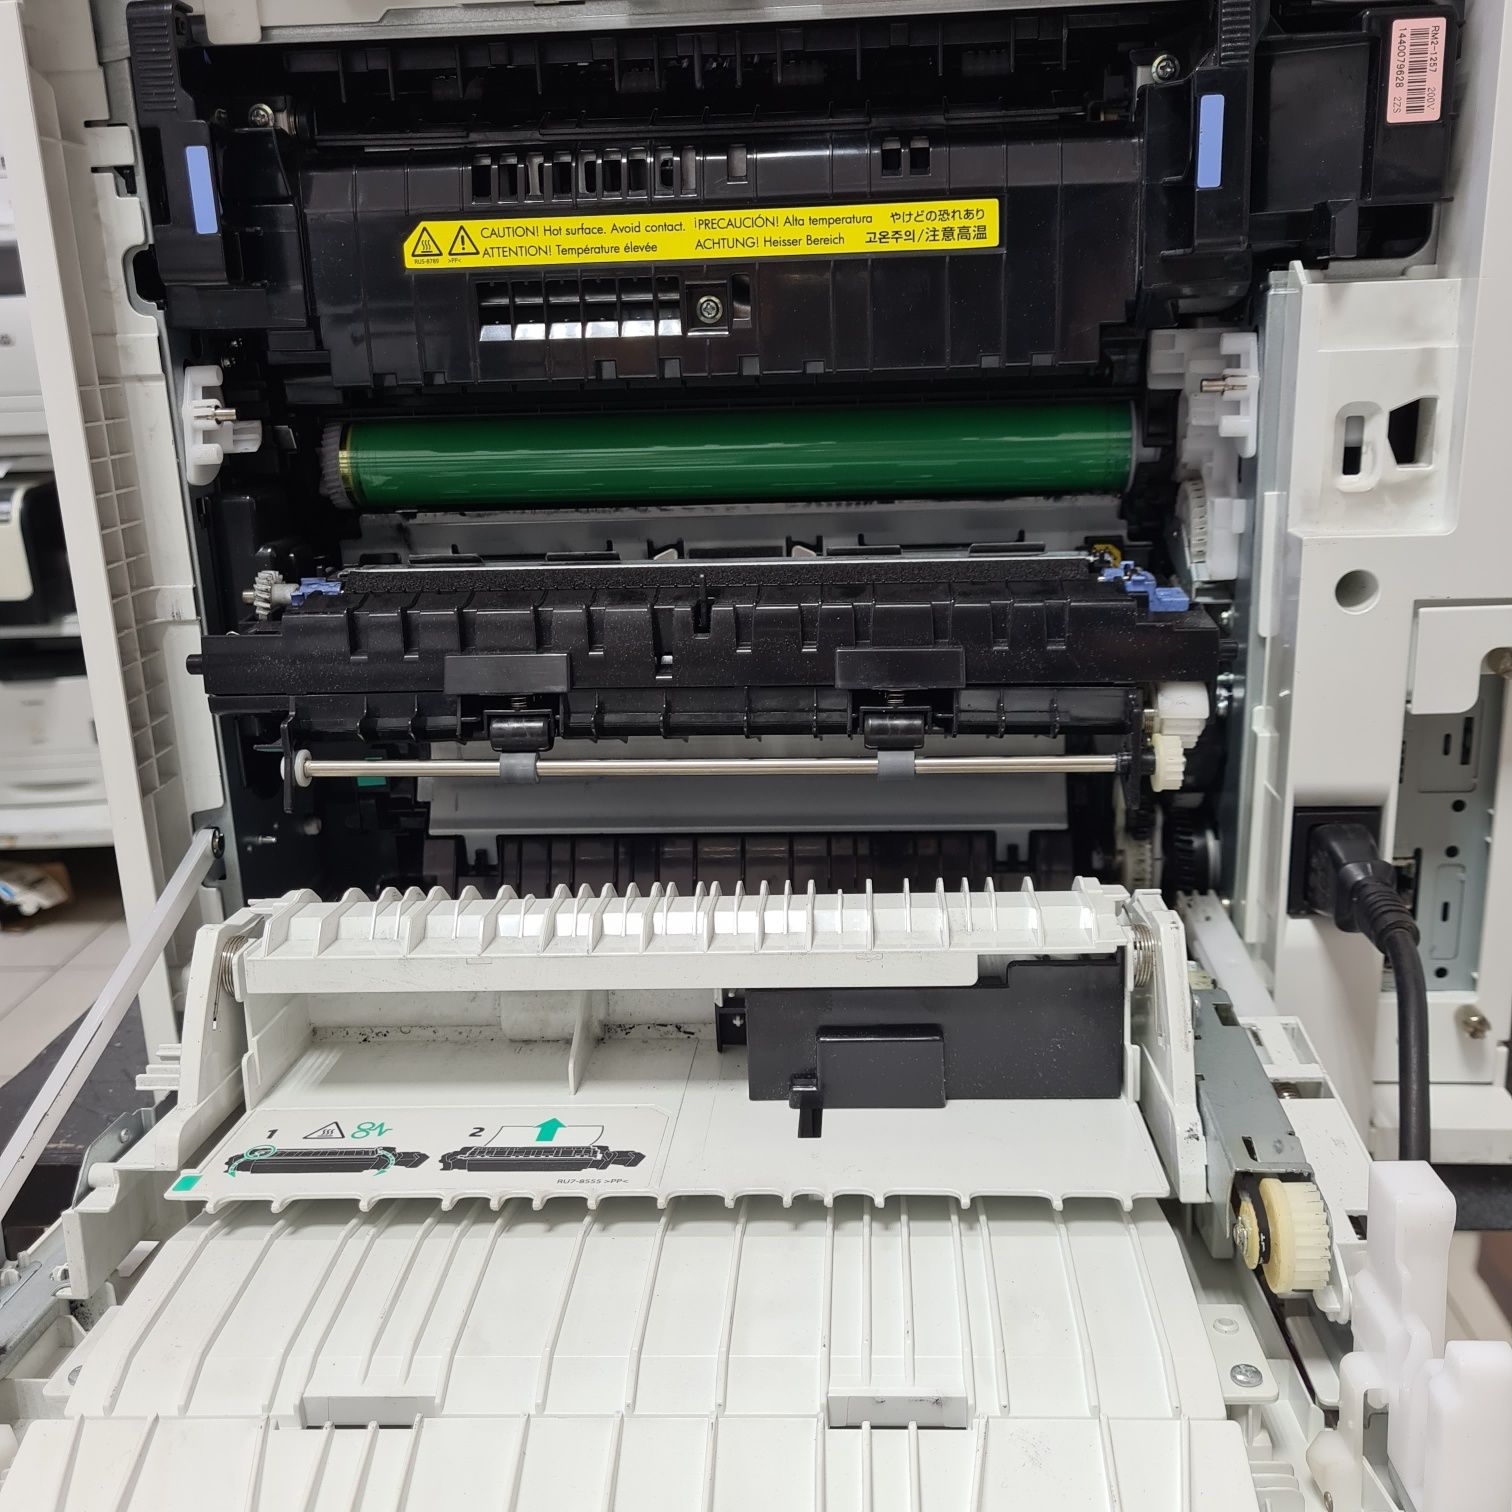 HP LaserJet Enterprise M608 . Лазерный принтер.  Гарантия